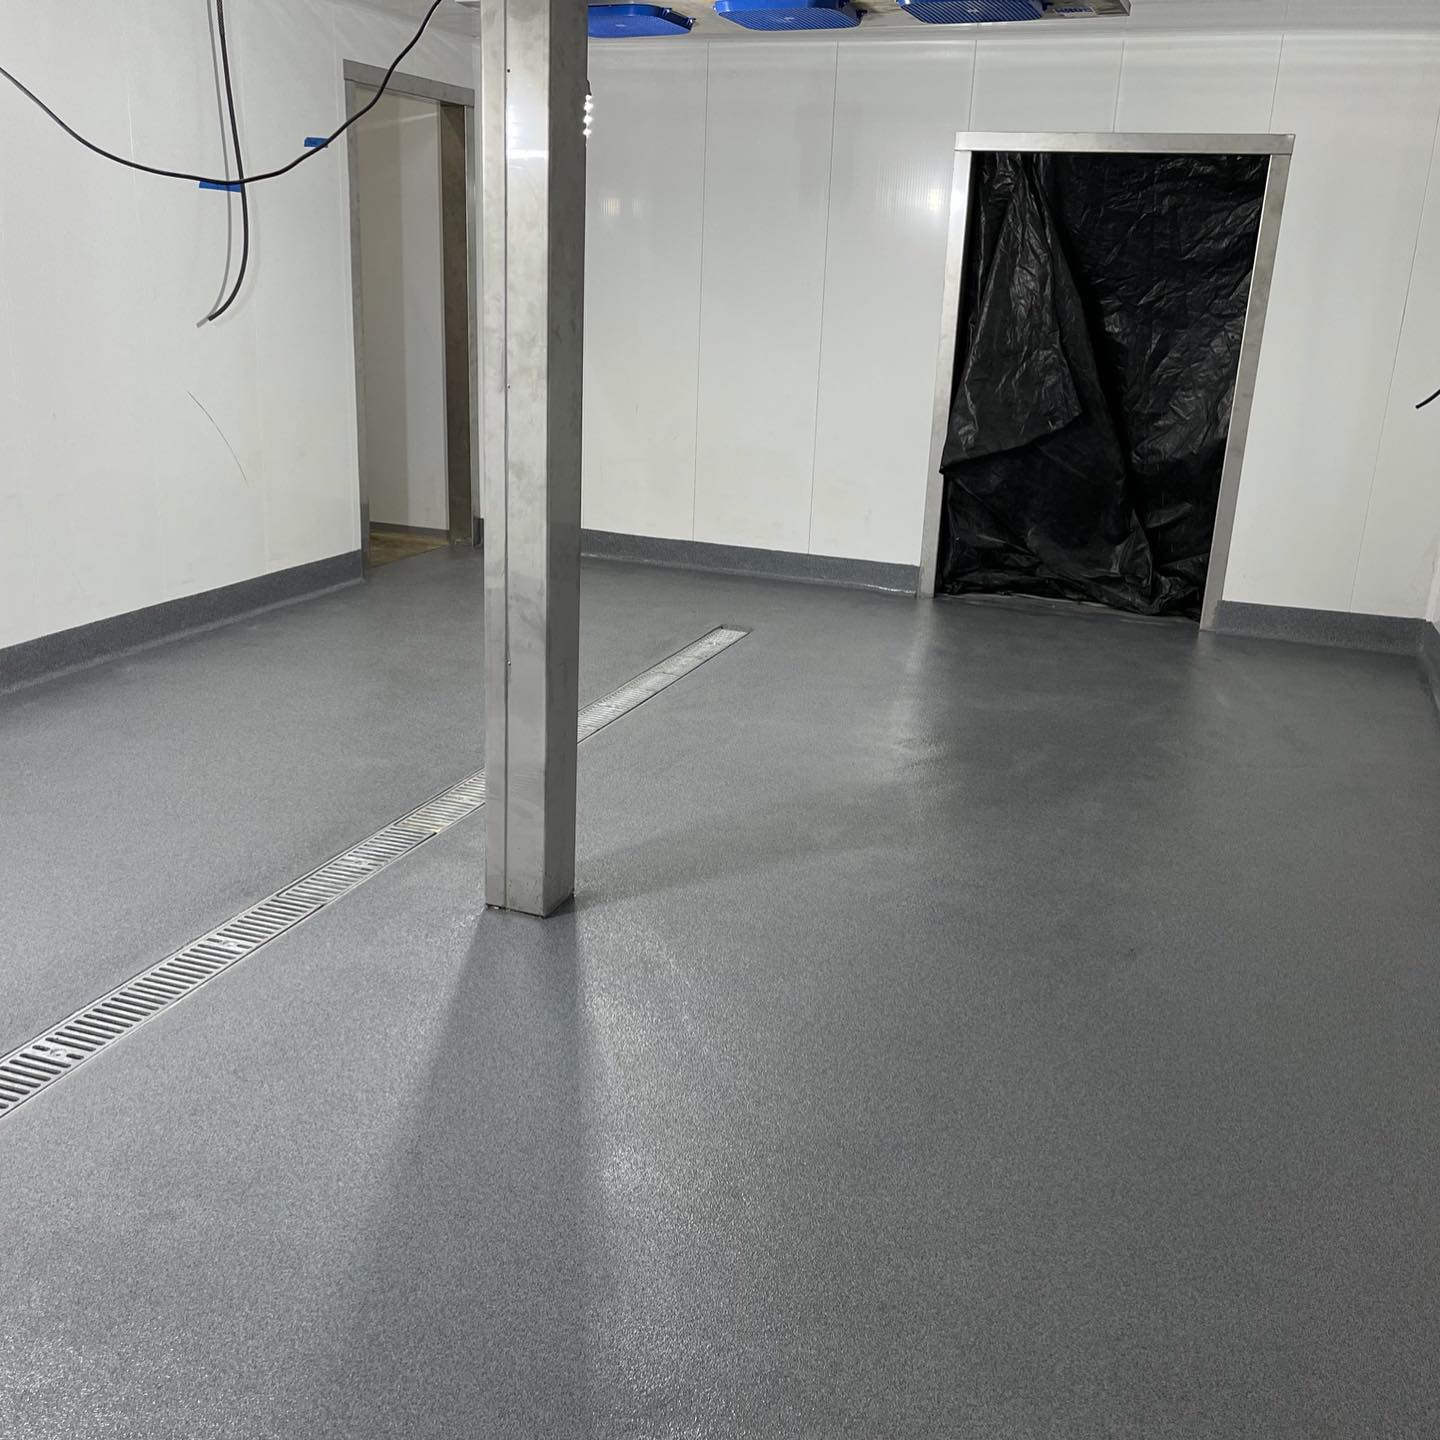 New resinous commercial floor install in Friona, TX.